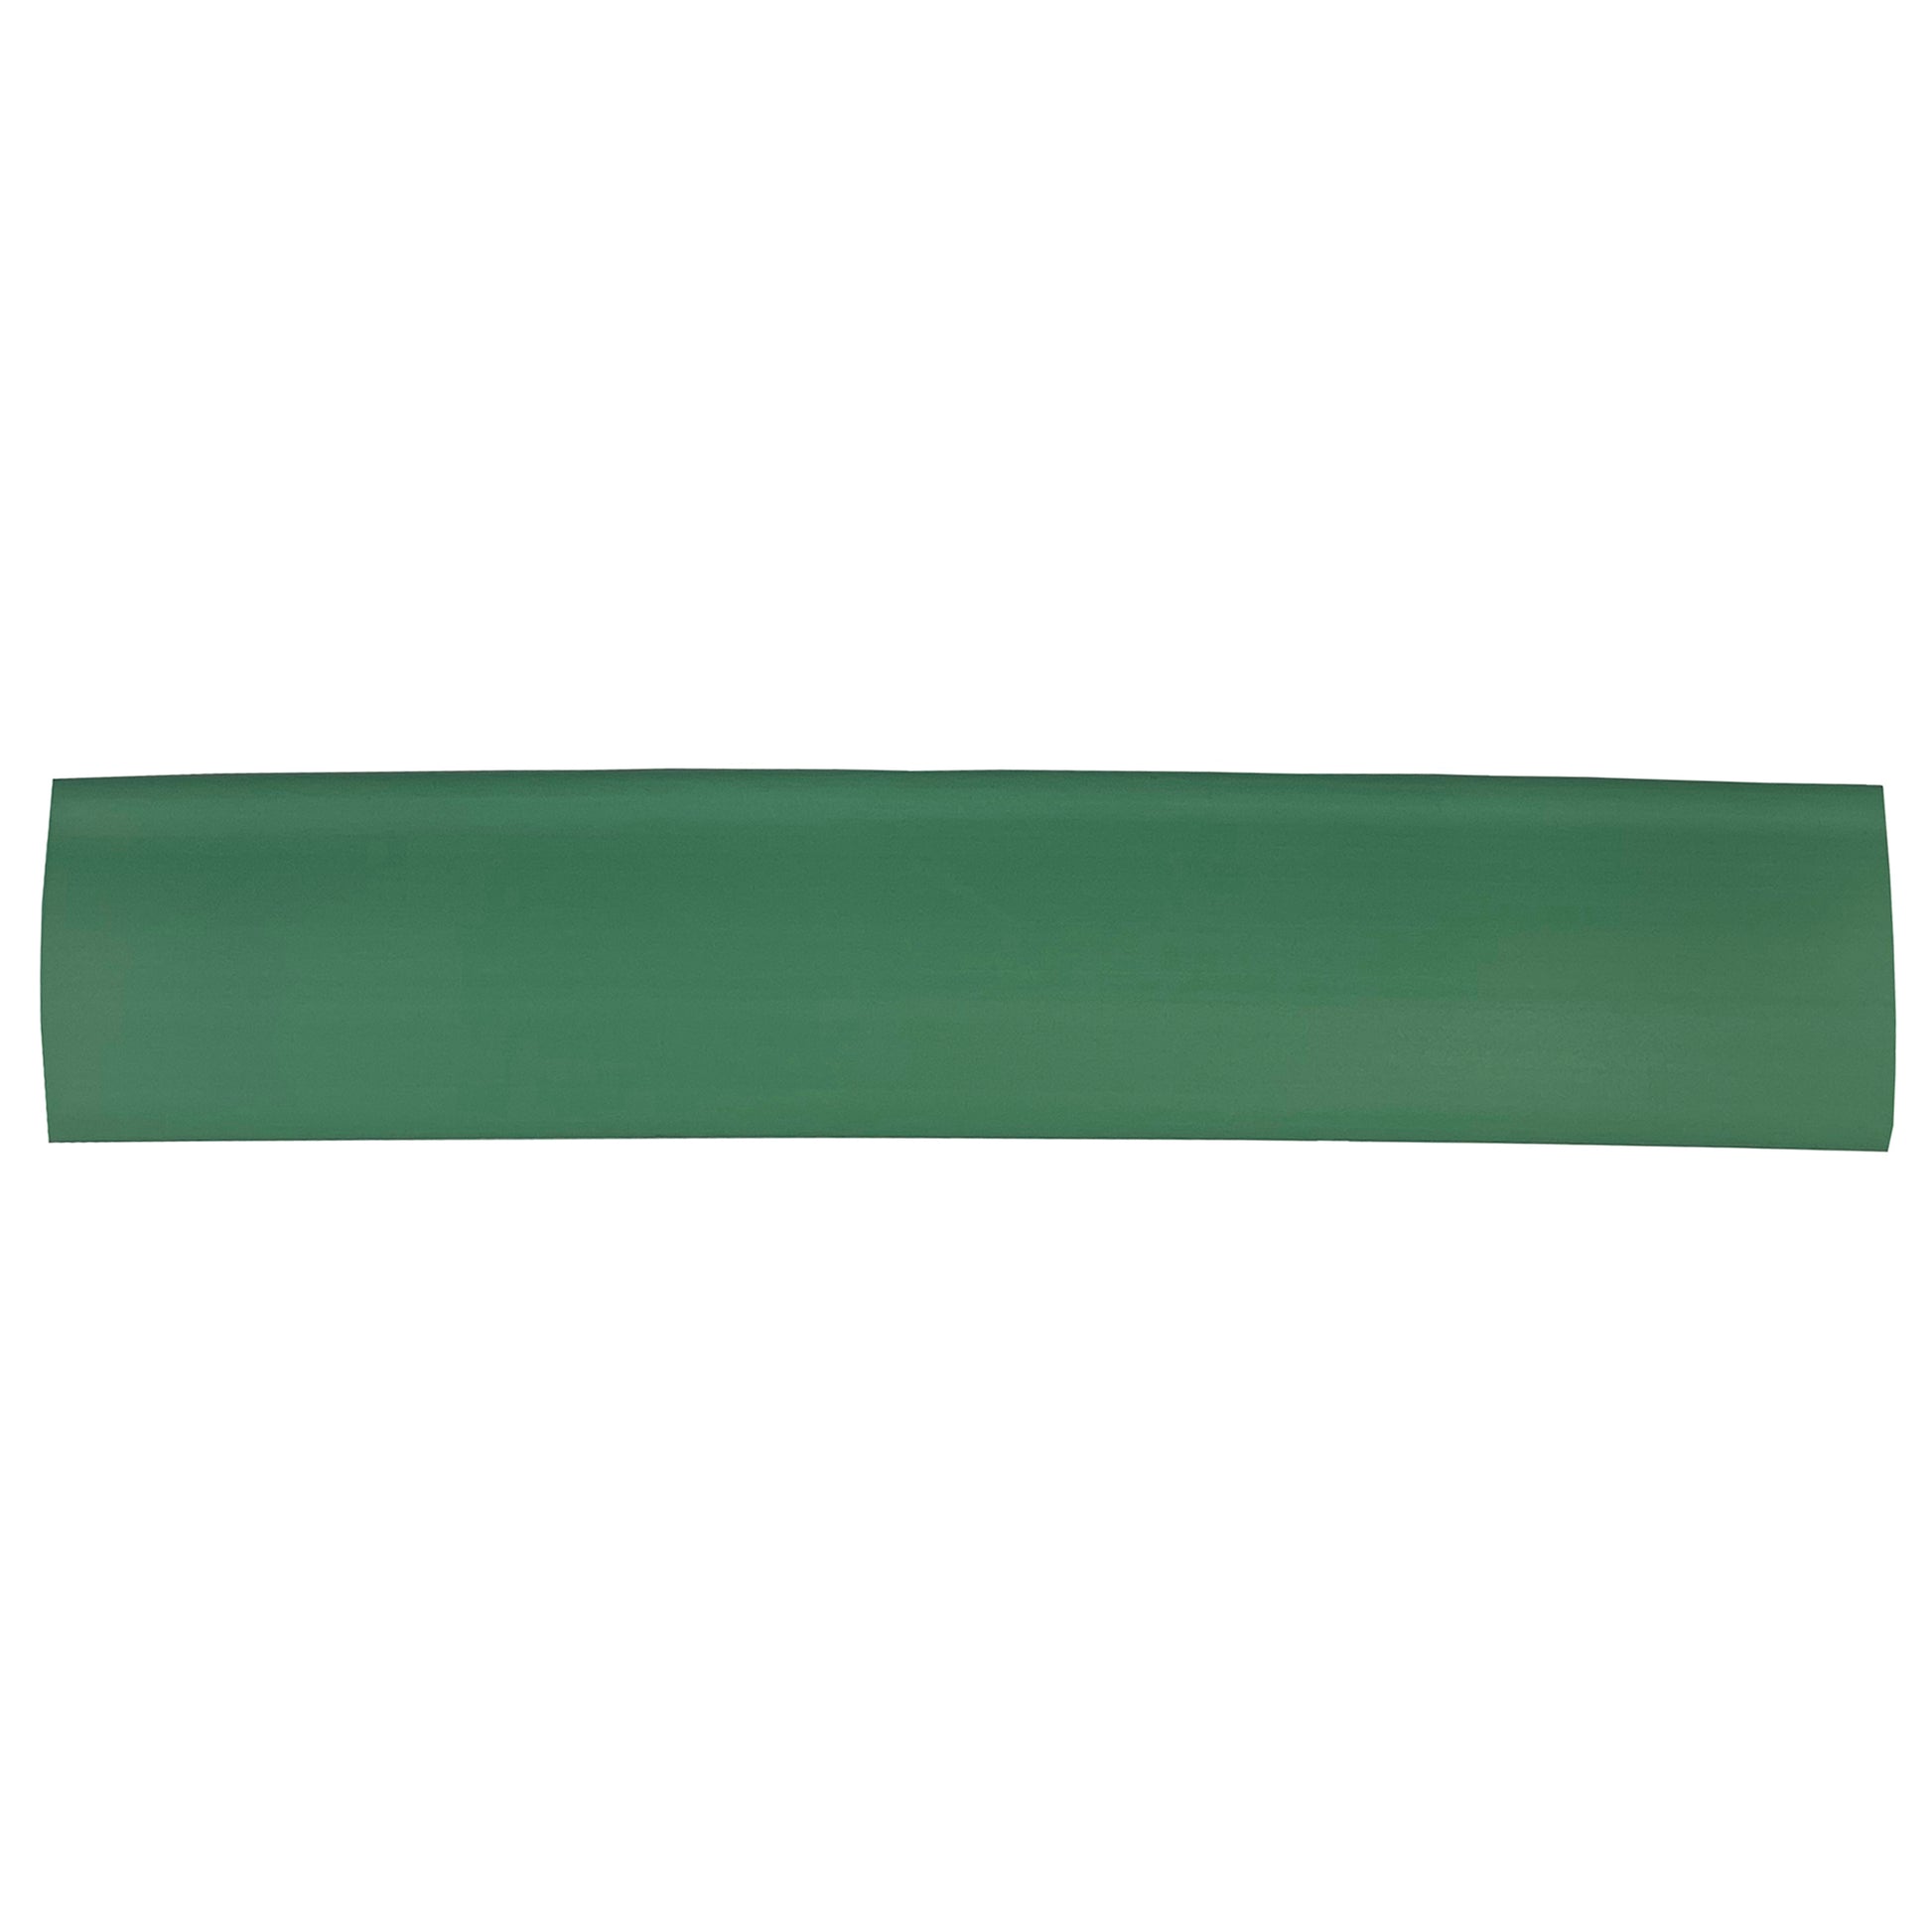 Flexible Thin Single Wall Non-Adhesive Heat Shrink Tubing 2:1 Green 3/4" ID - 25' Ft Spool